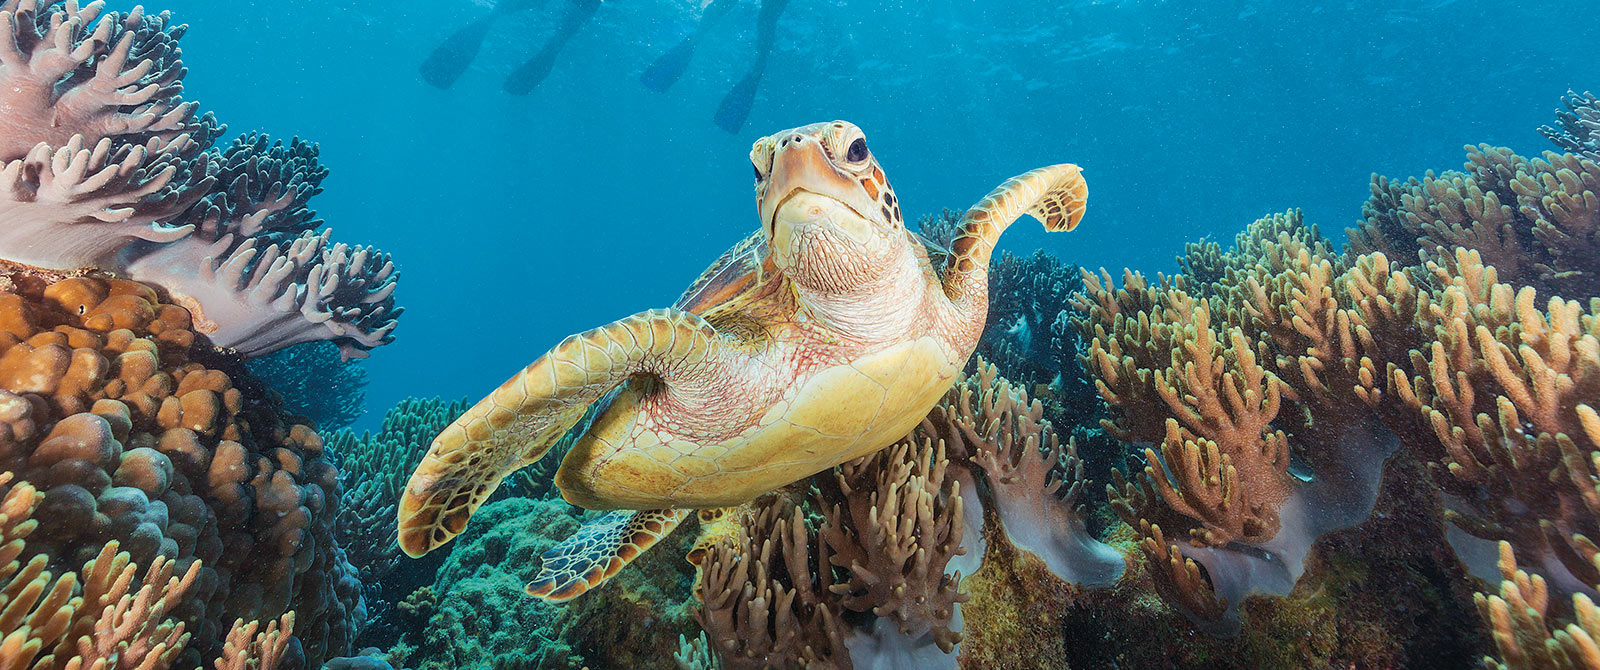 Sea Turtle in the Great Barrier Reef, Australia